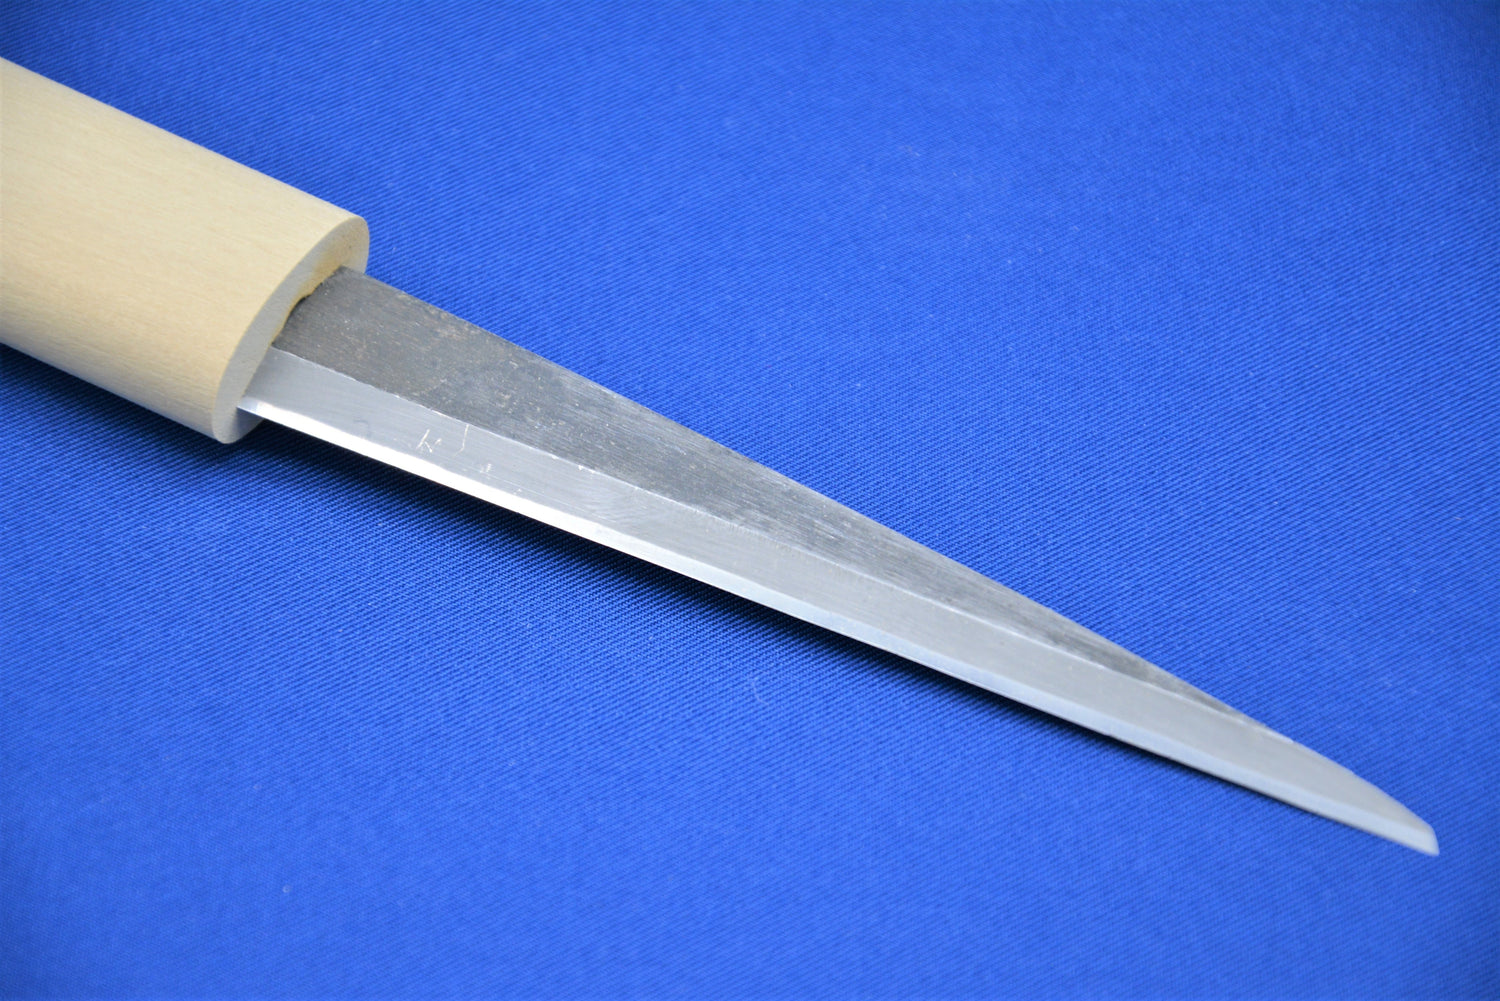 Kuri Carving Knives